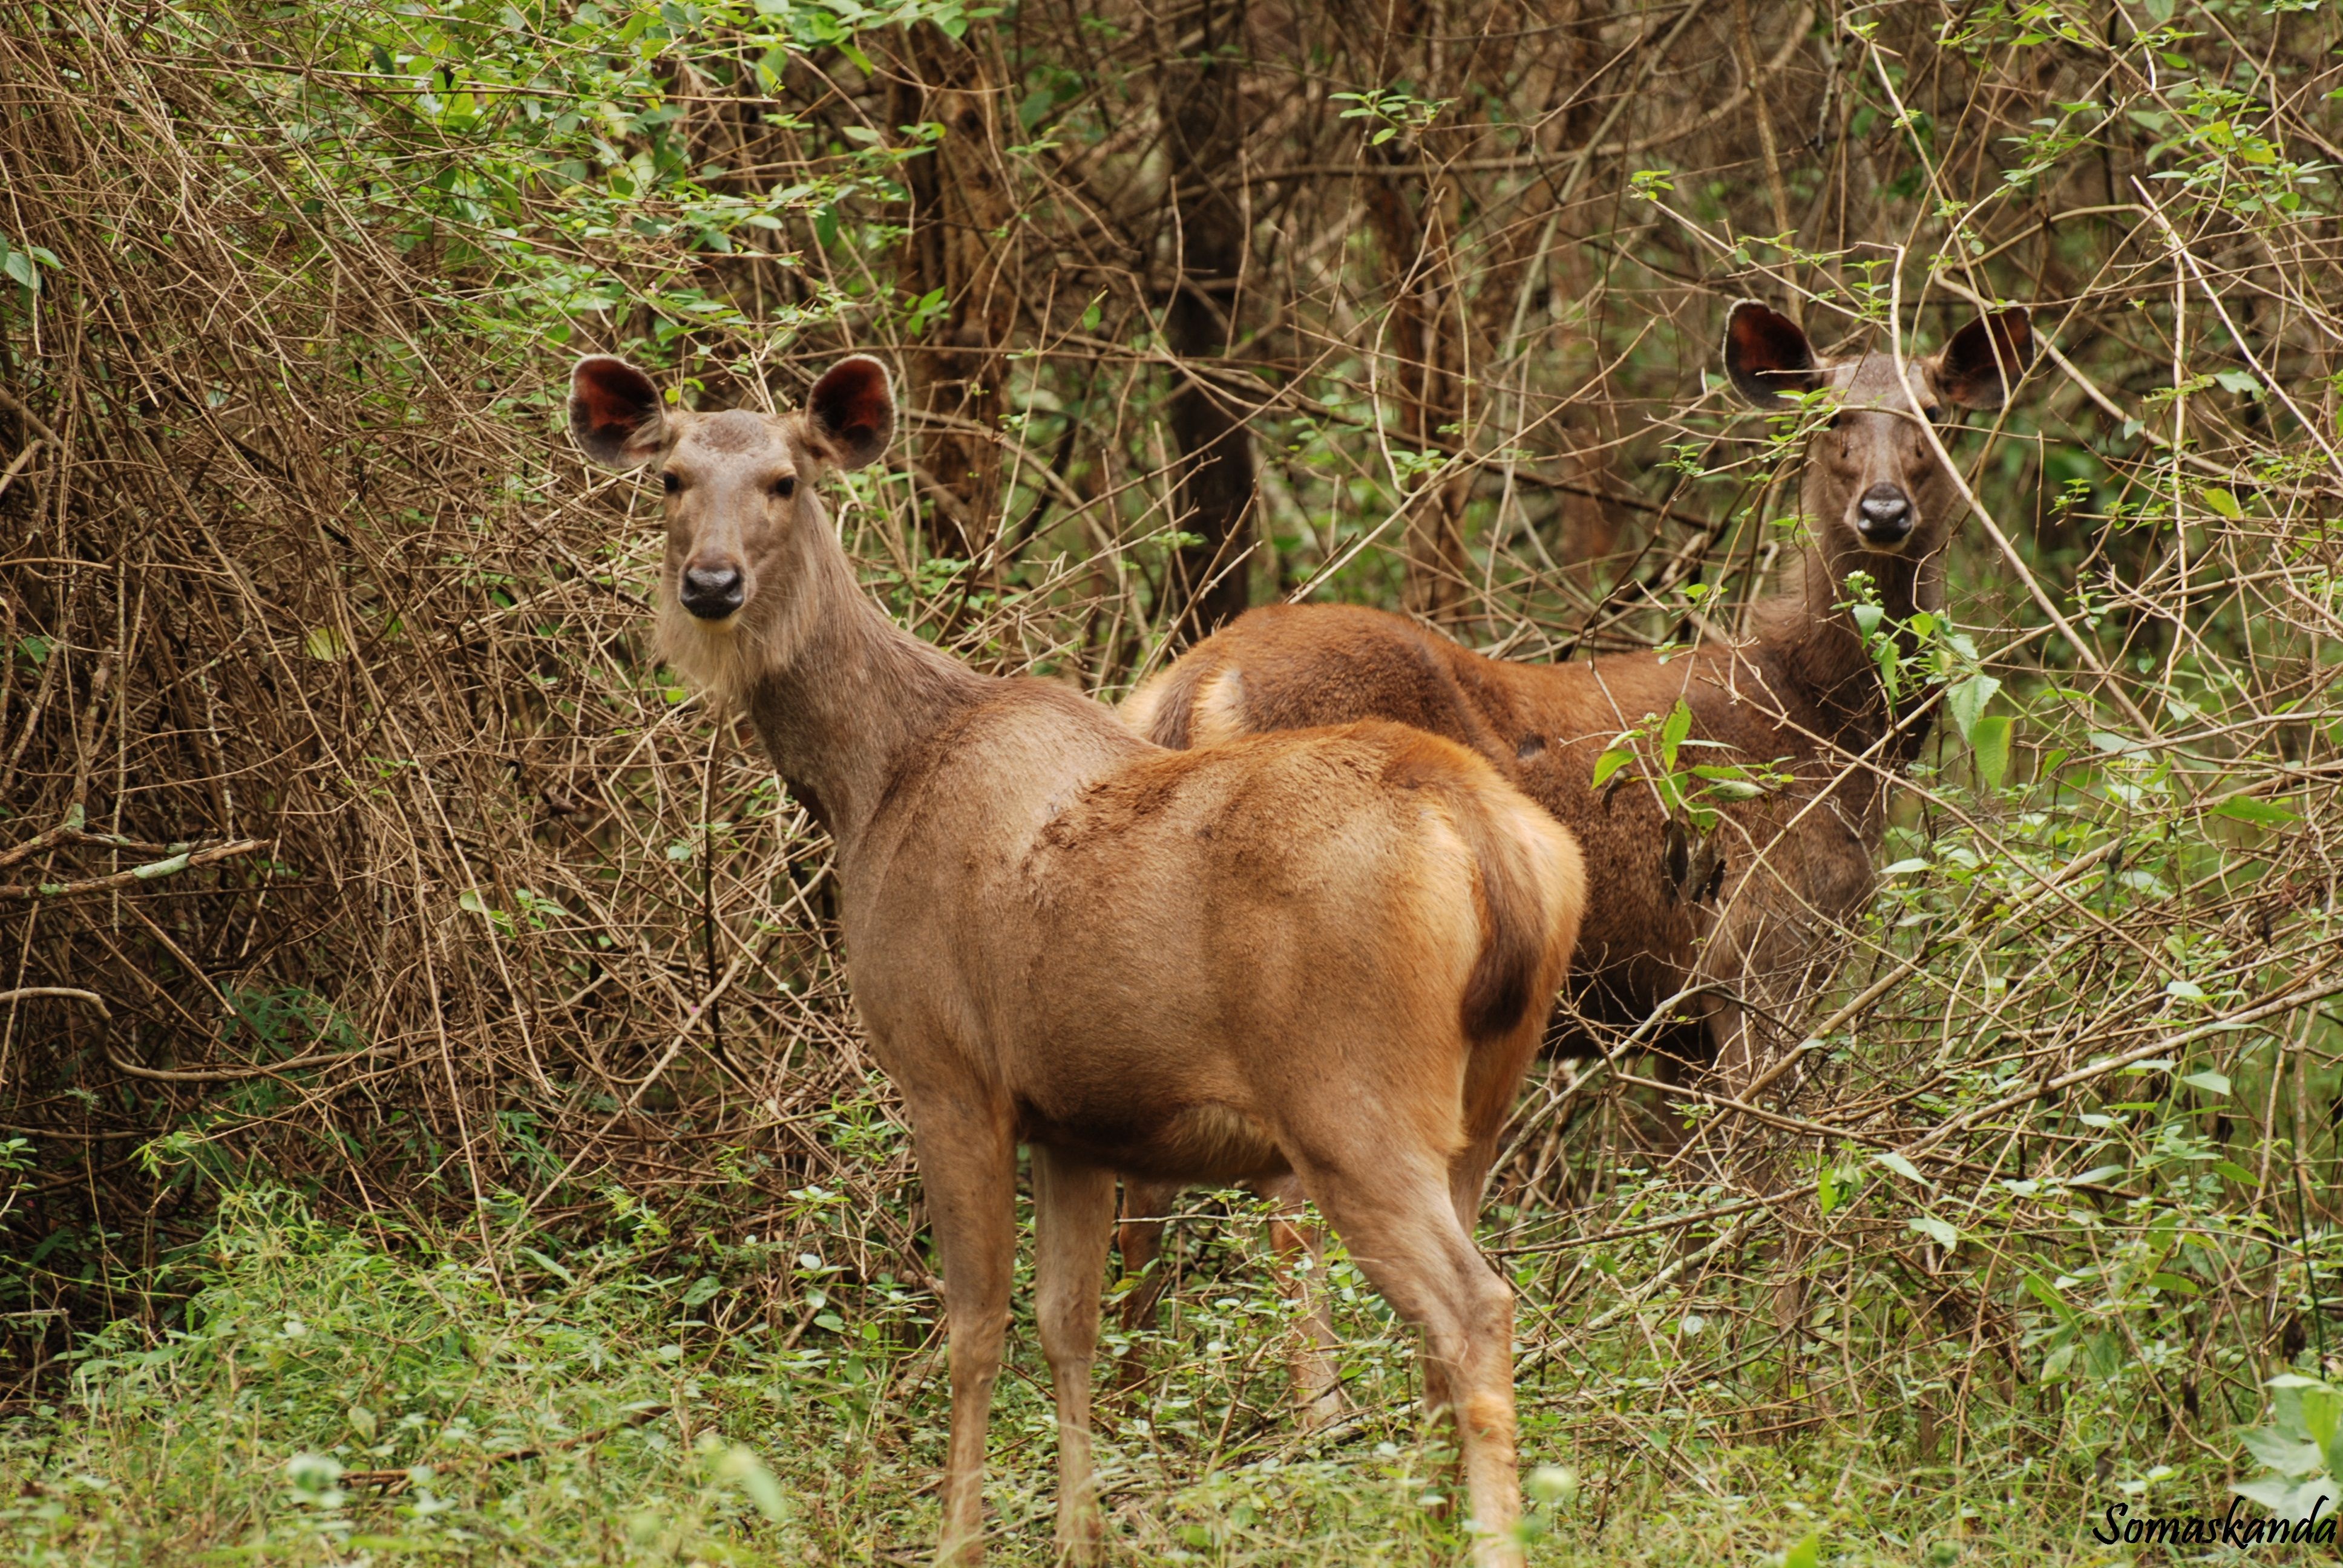 The week in wildlife | Sambar deer, Wildlife conservation and Wildlife